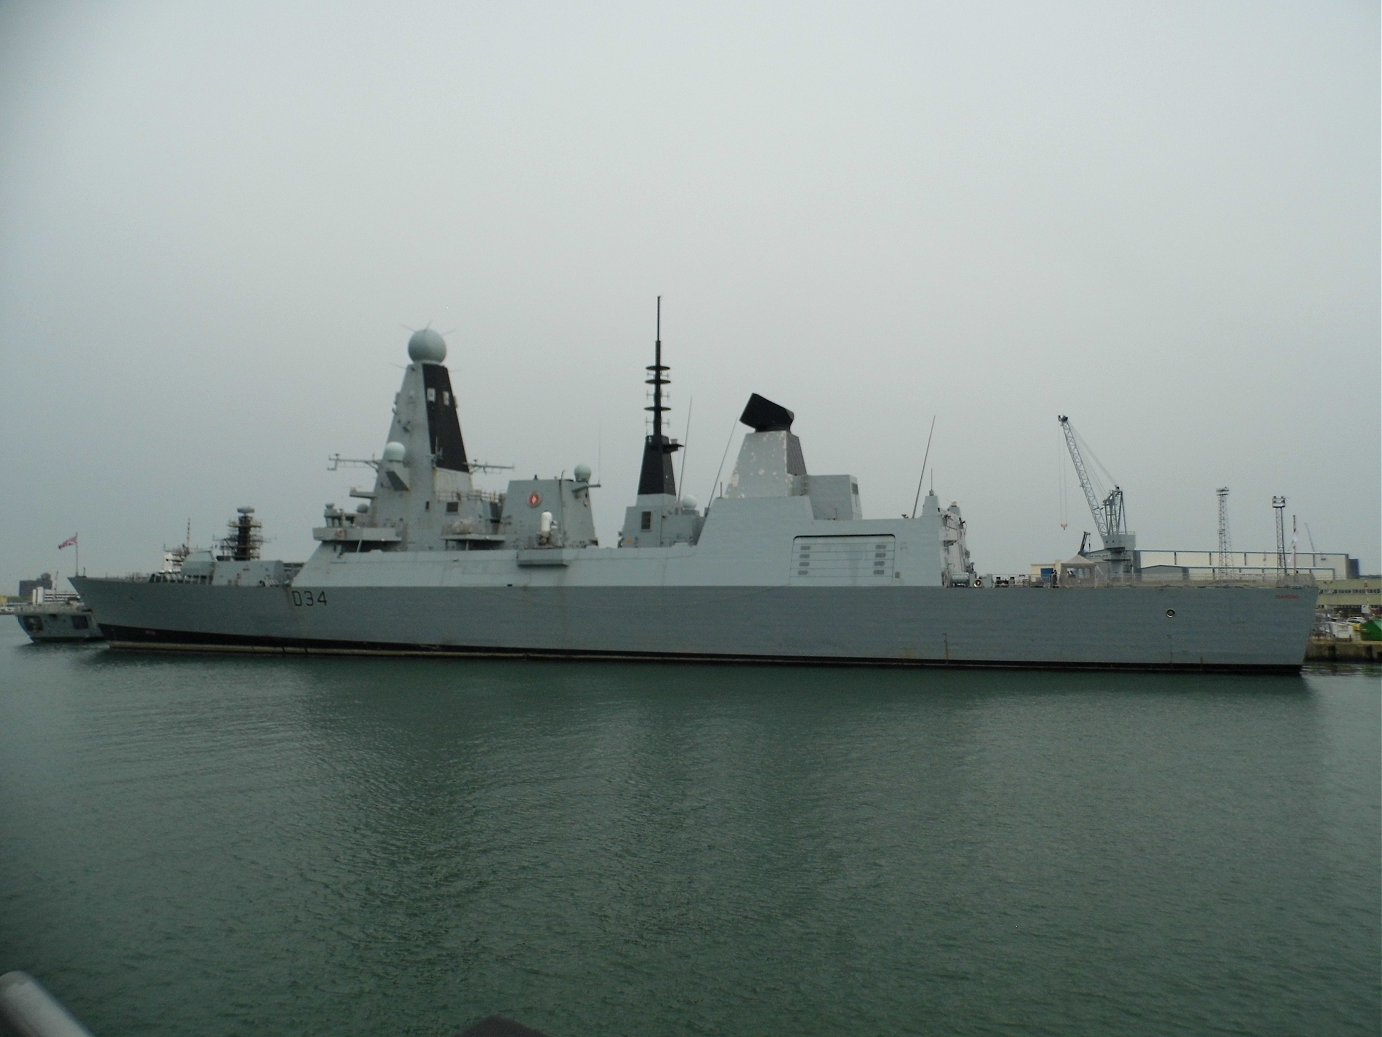 Type 45 destroyer H.M.S. Diamond D34 at Portsmouth Naval Base 23 April 2019